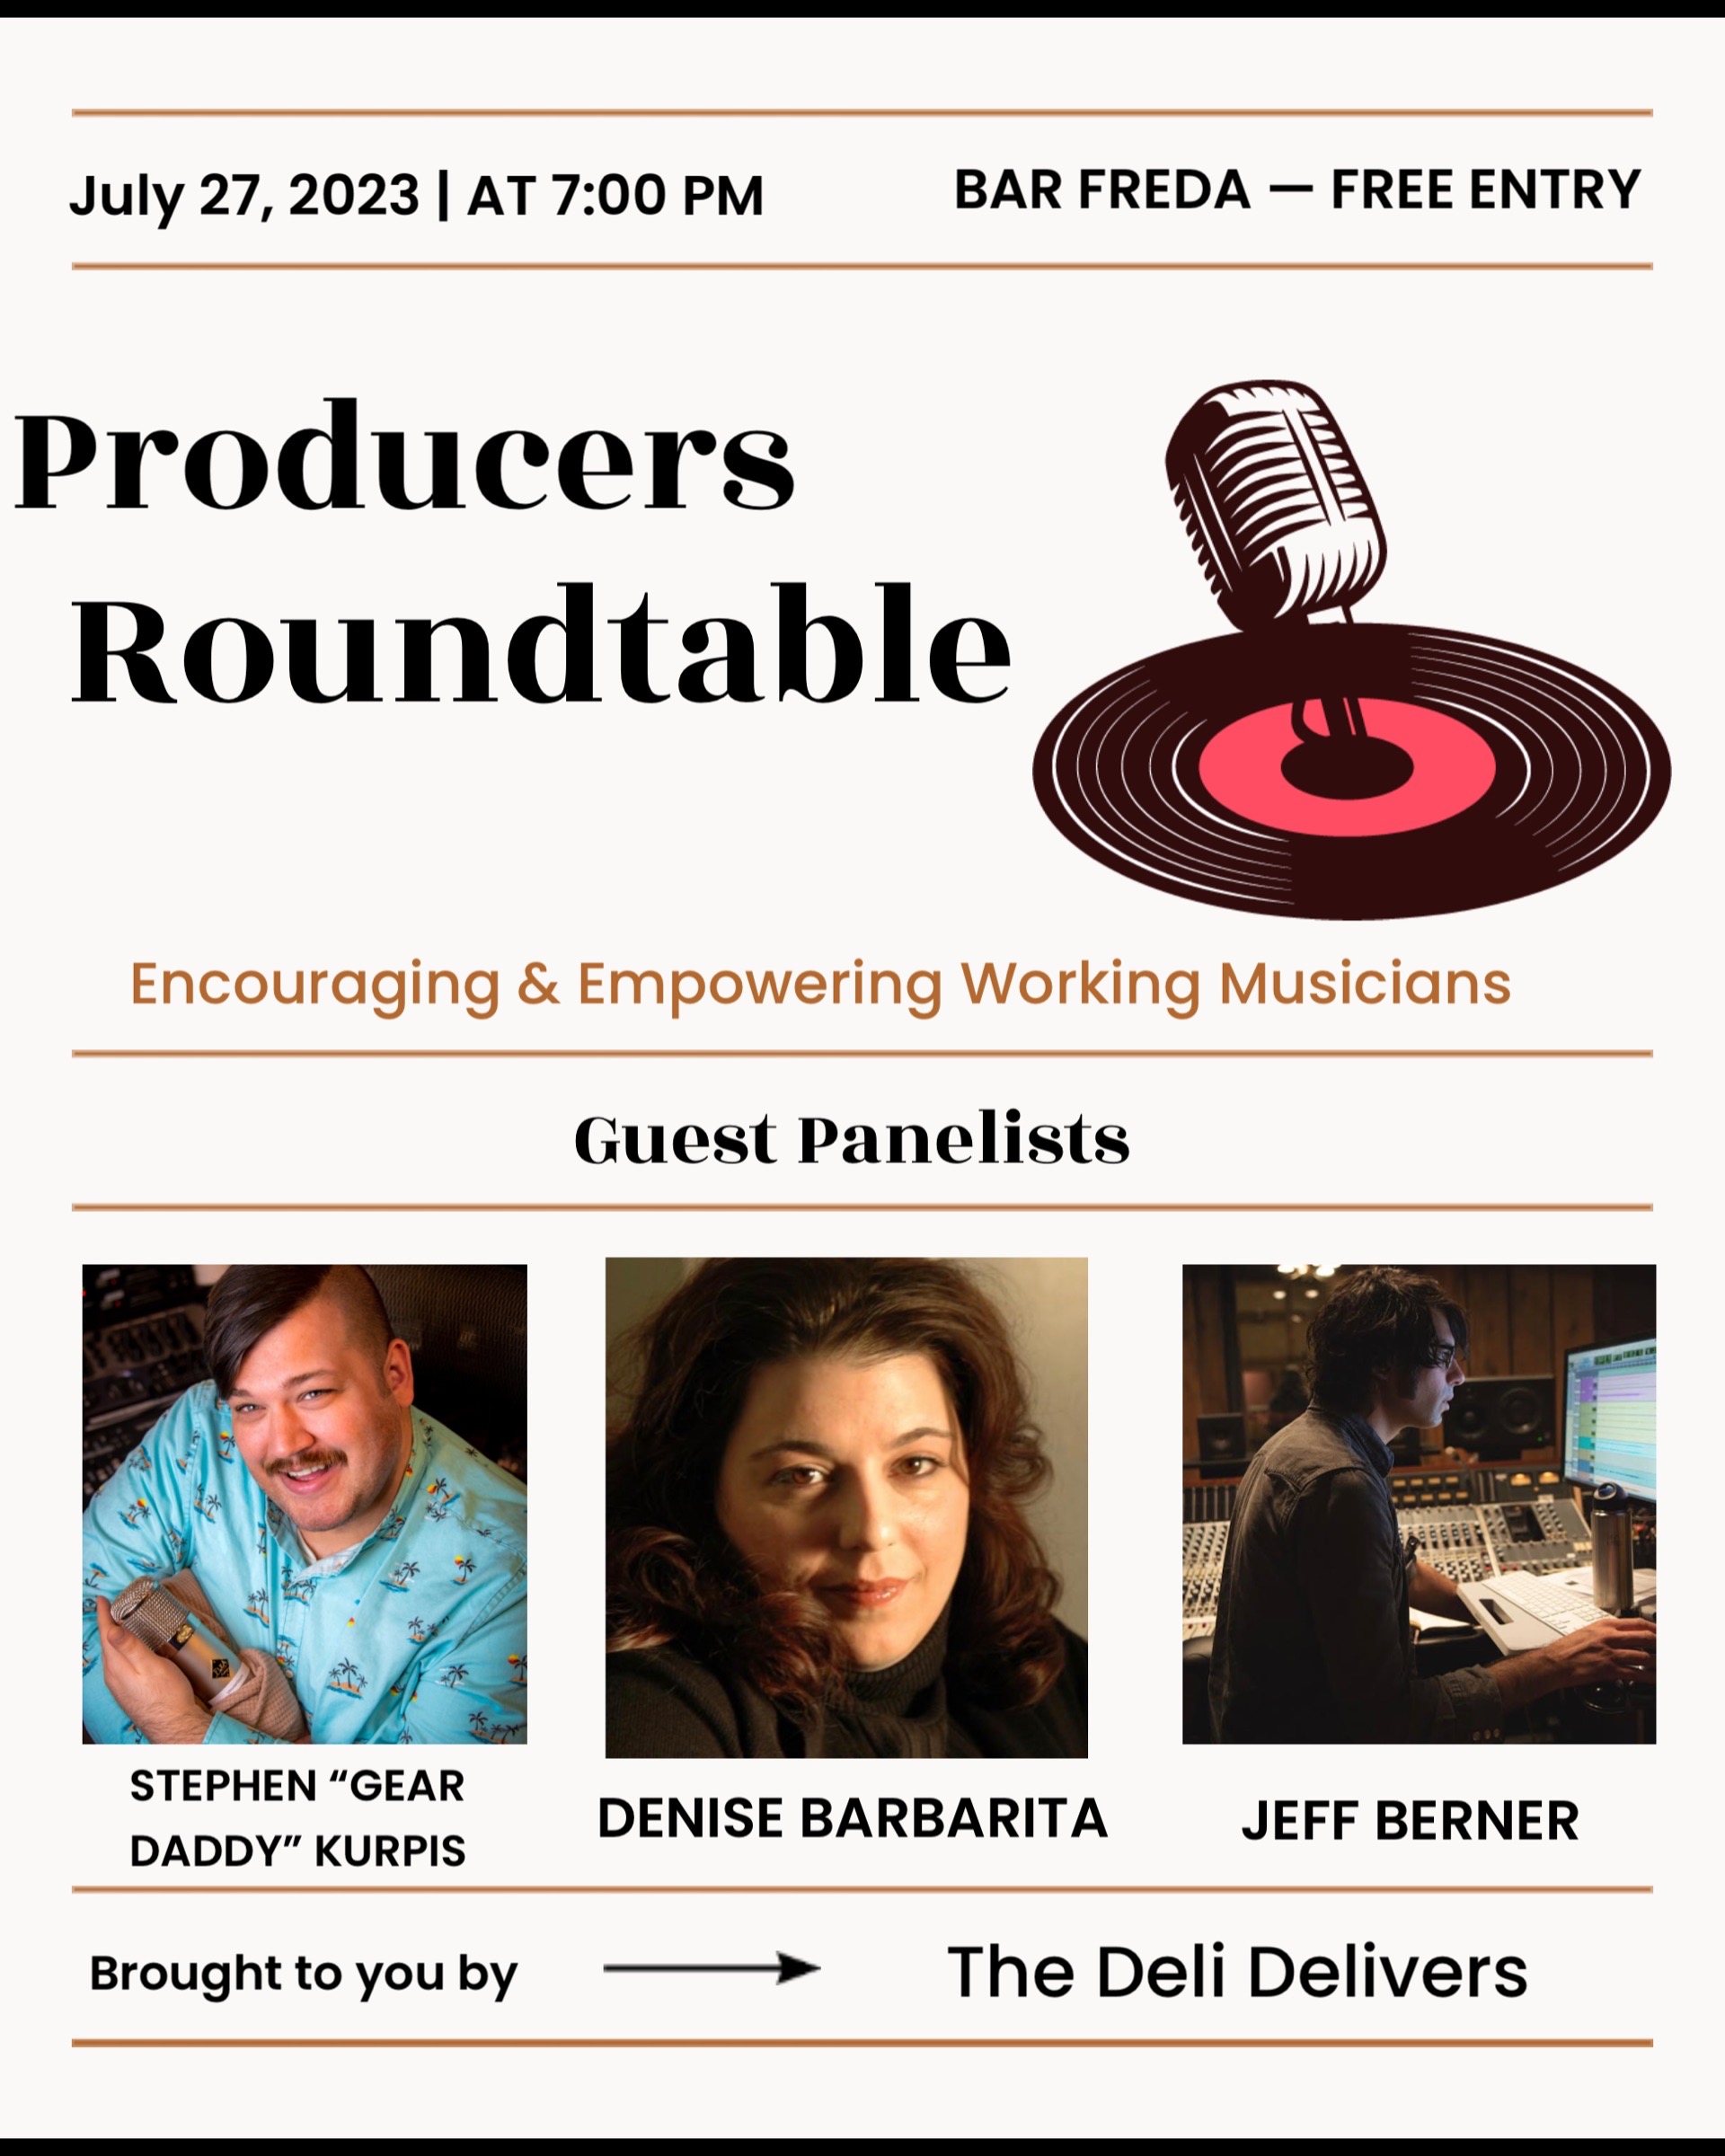 Producers Roundtable at Brooklyn’s Bar Freda tonight!